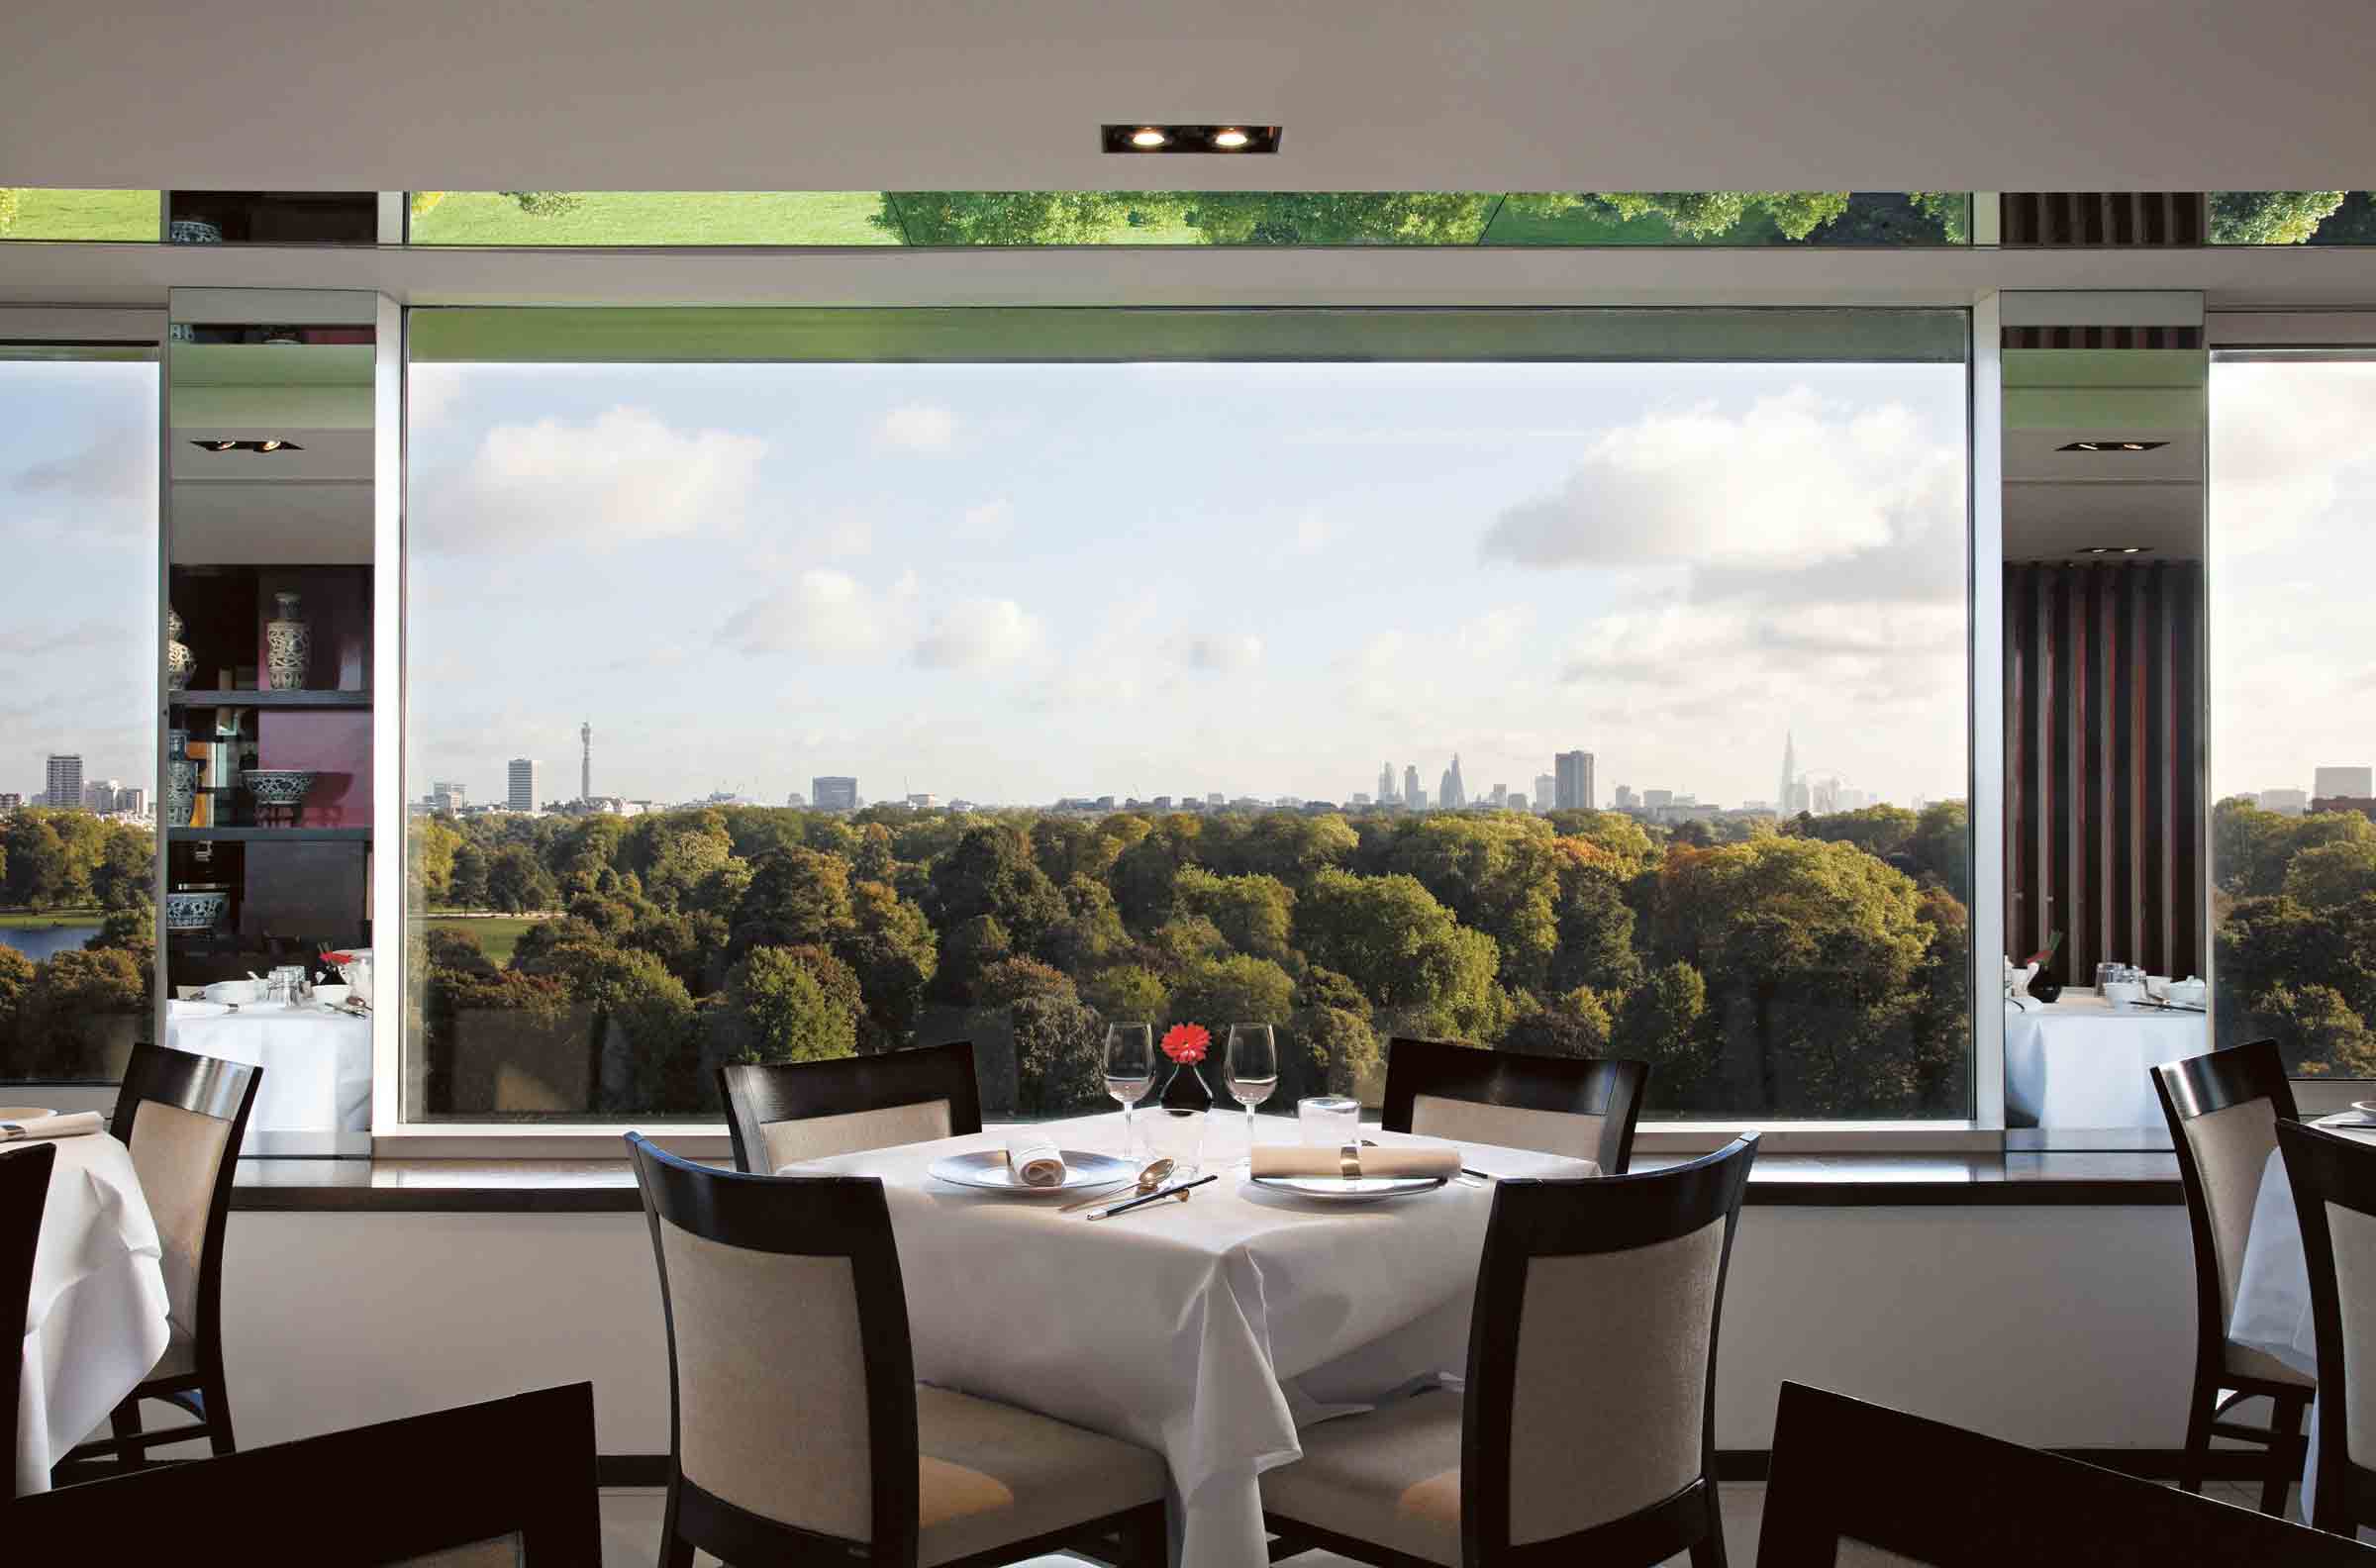 restaurant 1 - hotel royal garden - london, united kingdom